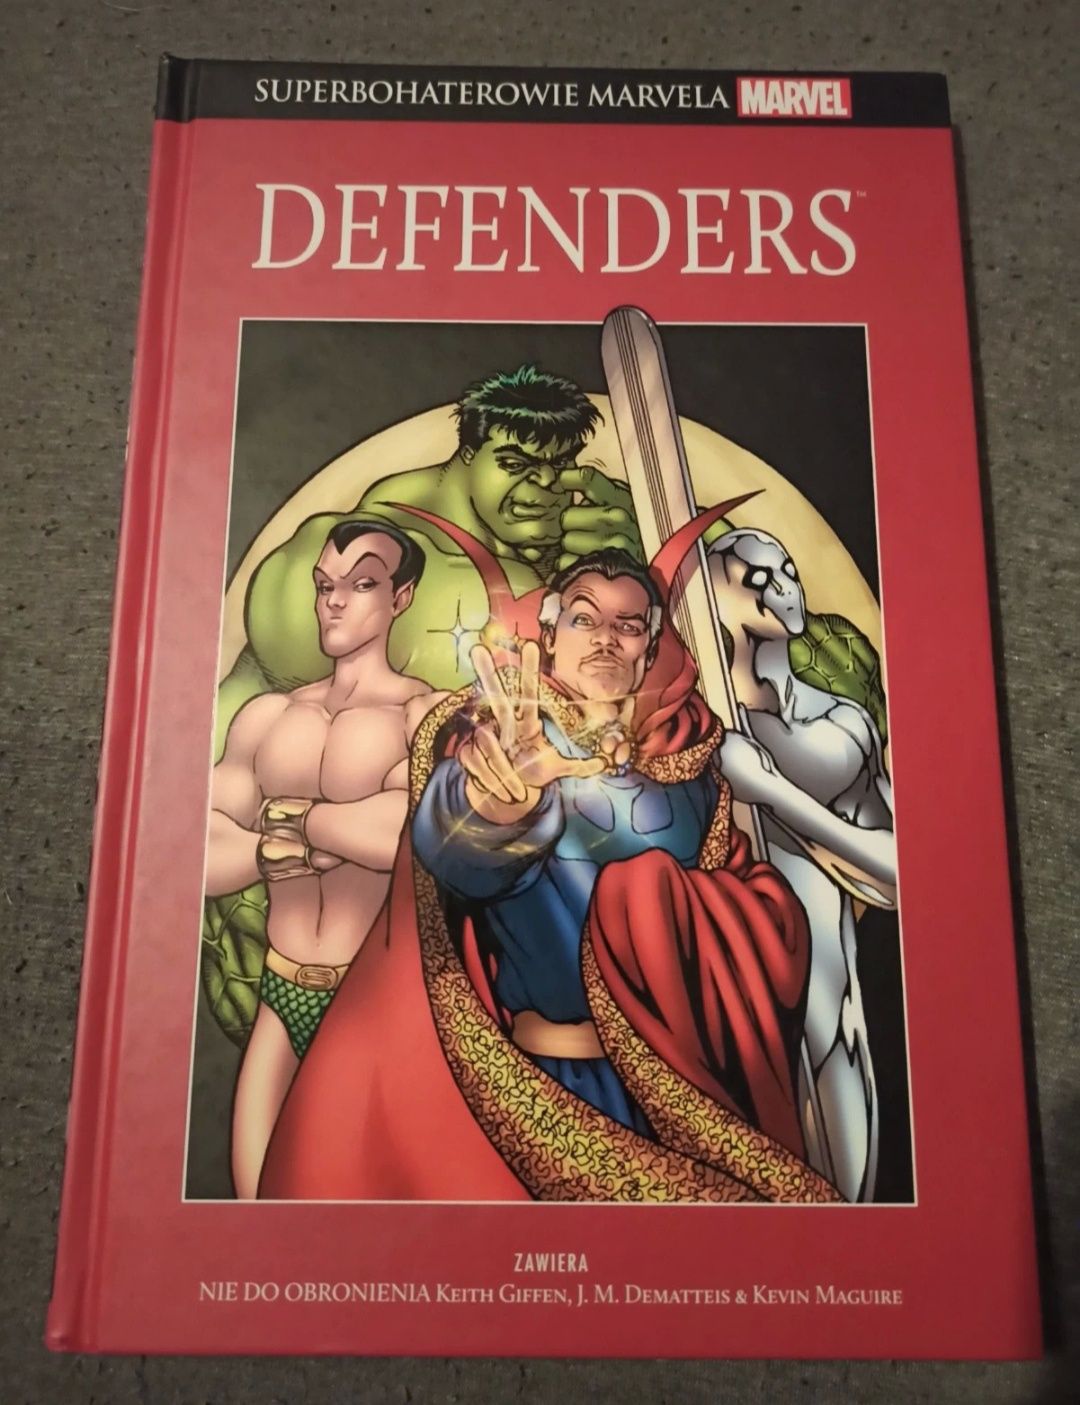 Superbohaterowie Marvela Defenders